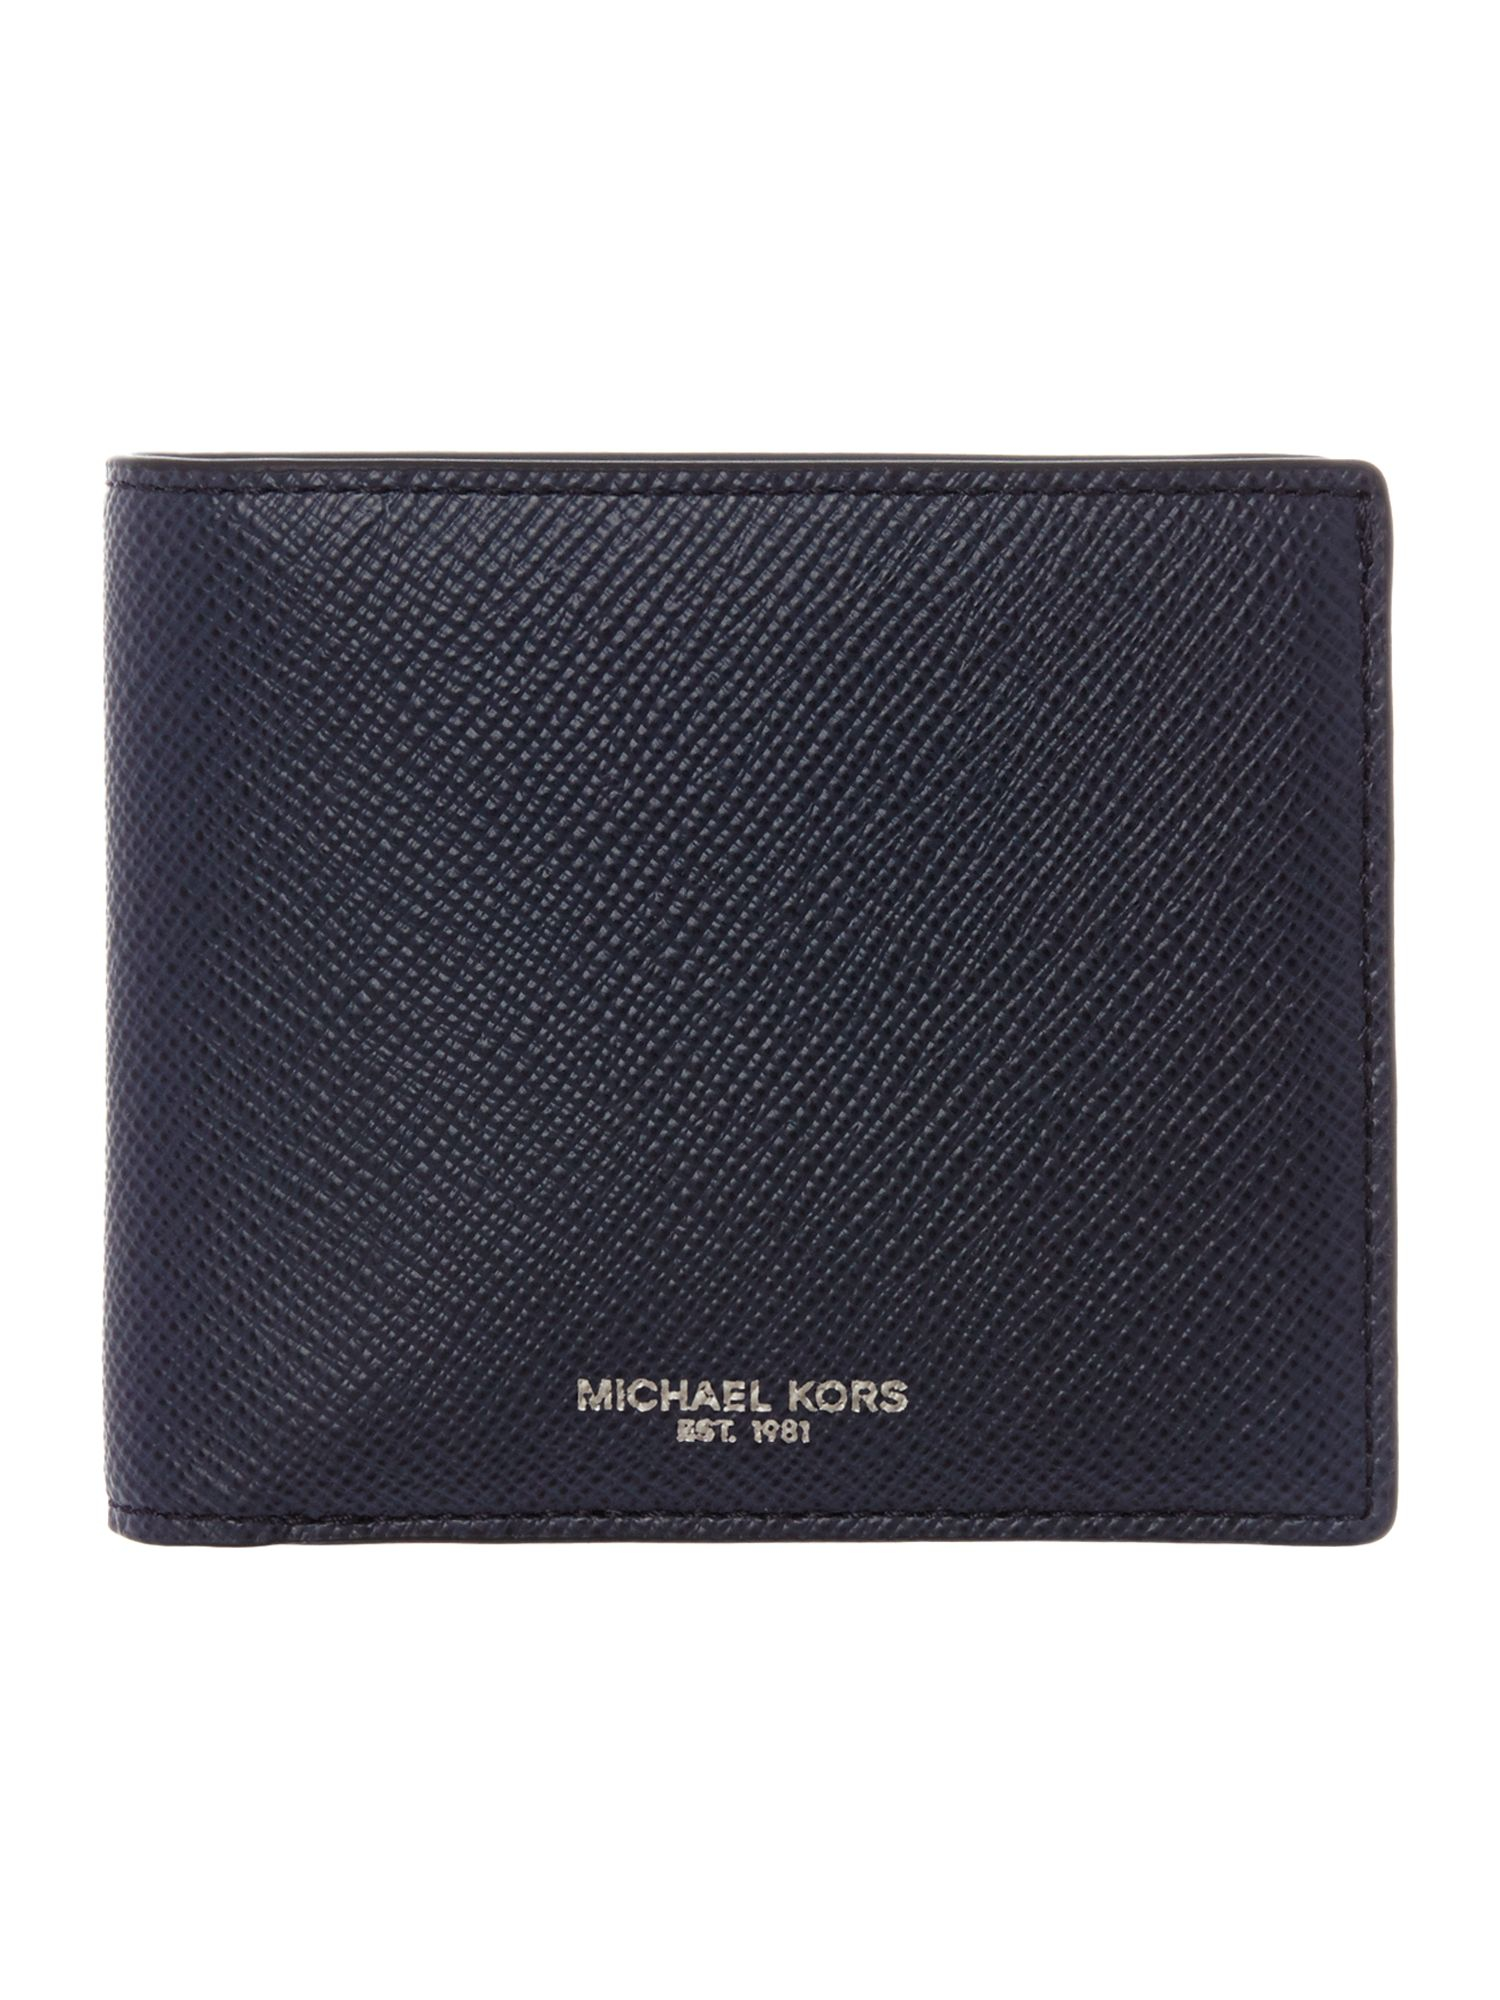 Michael kors Billfold Crossgrain Leather Wallet in Blue for Men (Navy ...